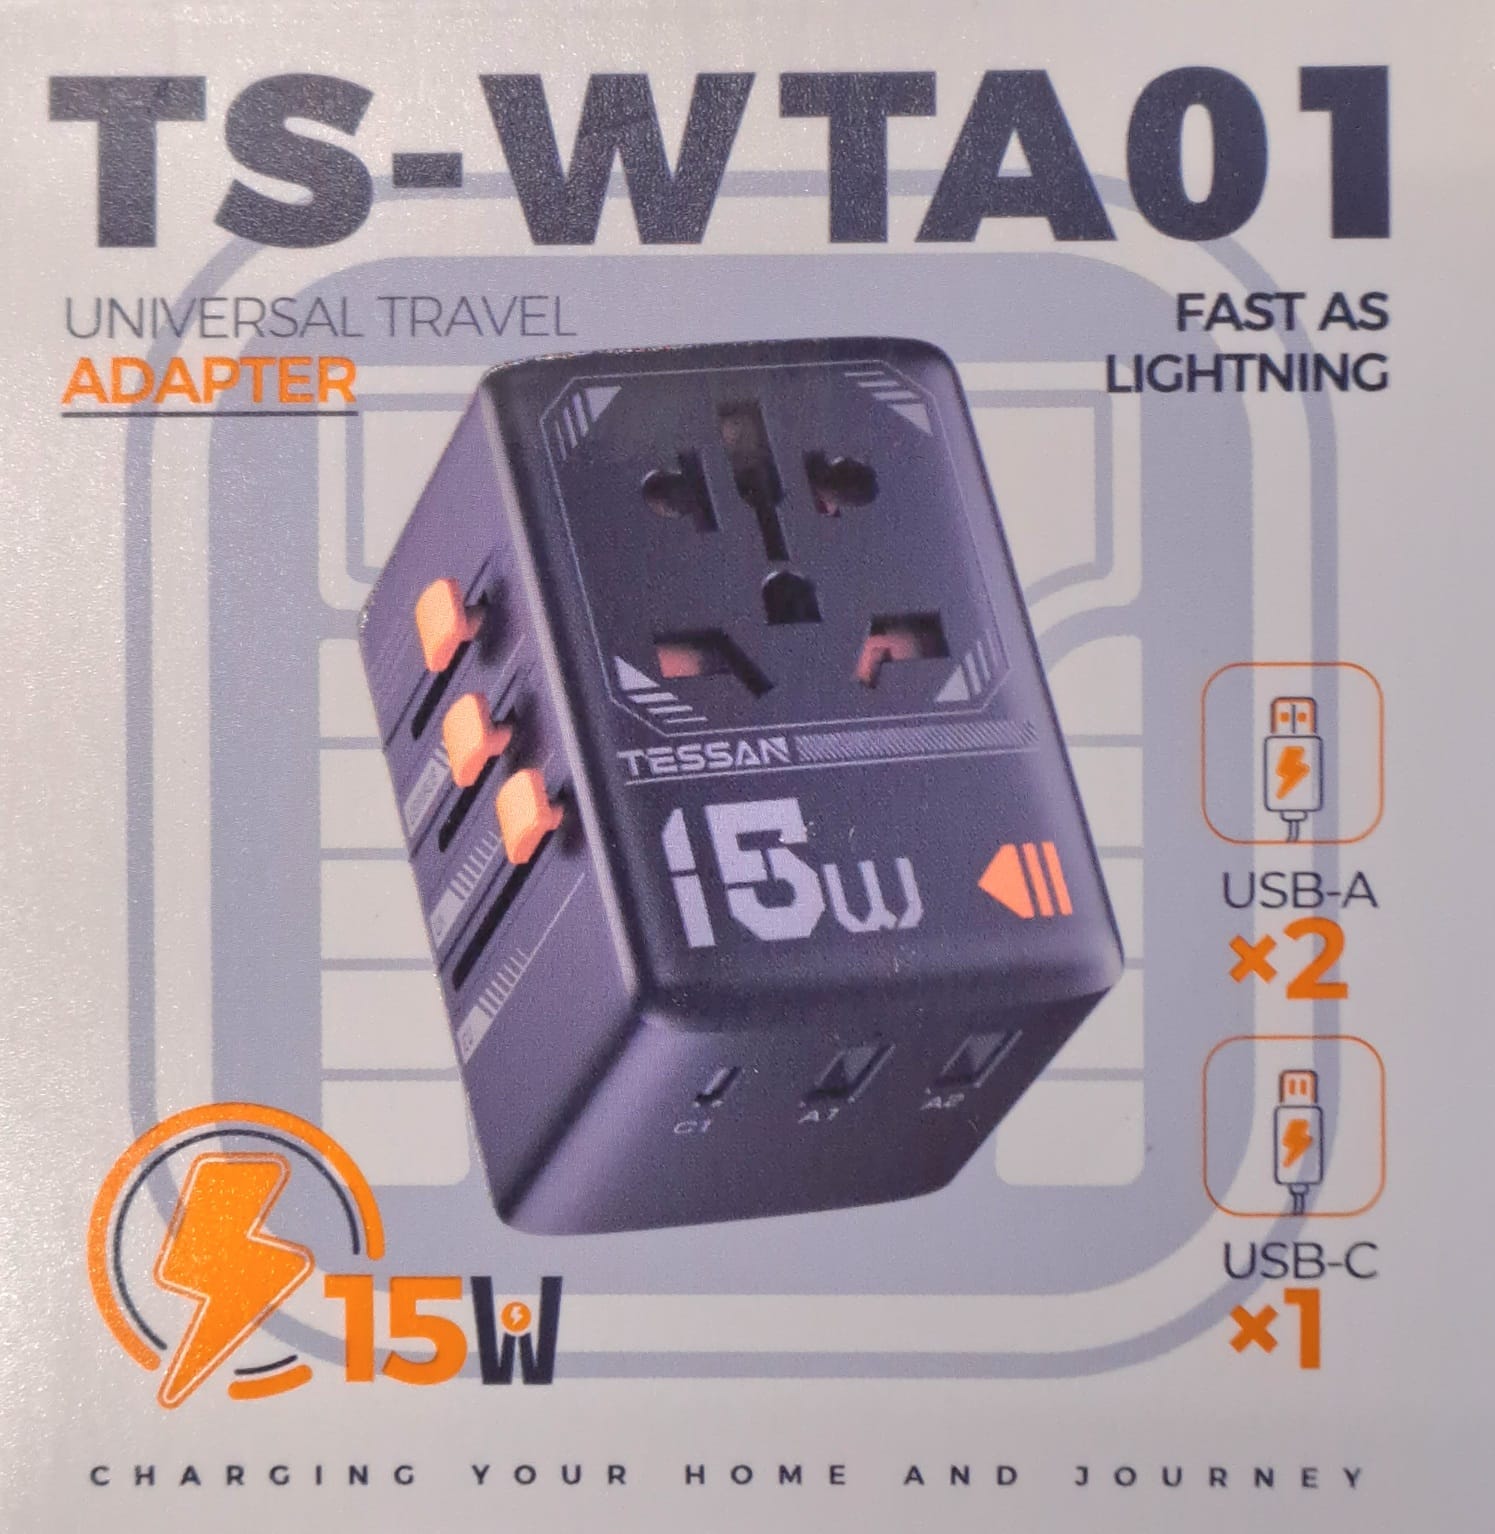 Tessan 15W Universal Travel Adapter